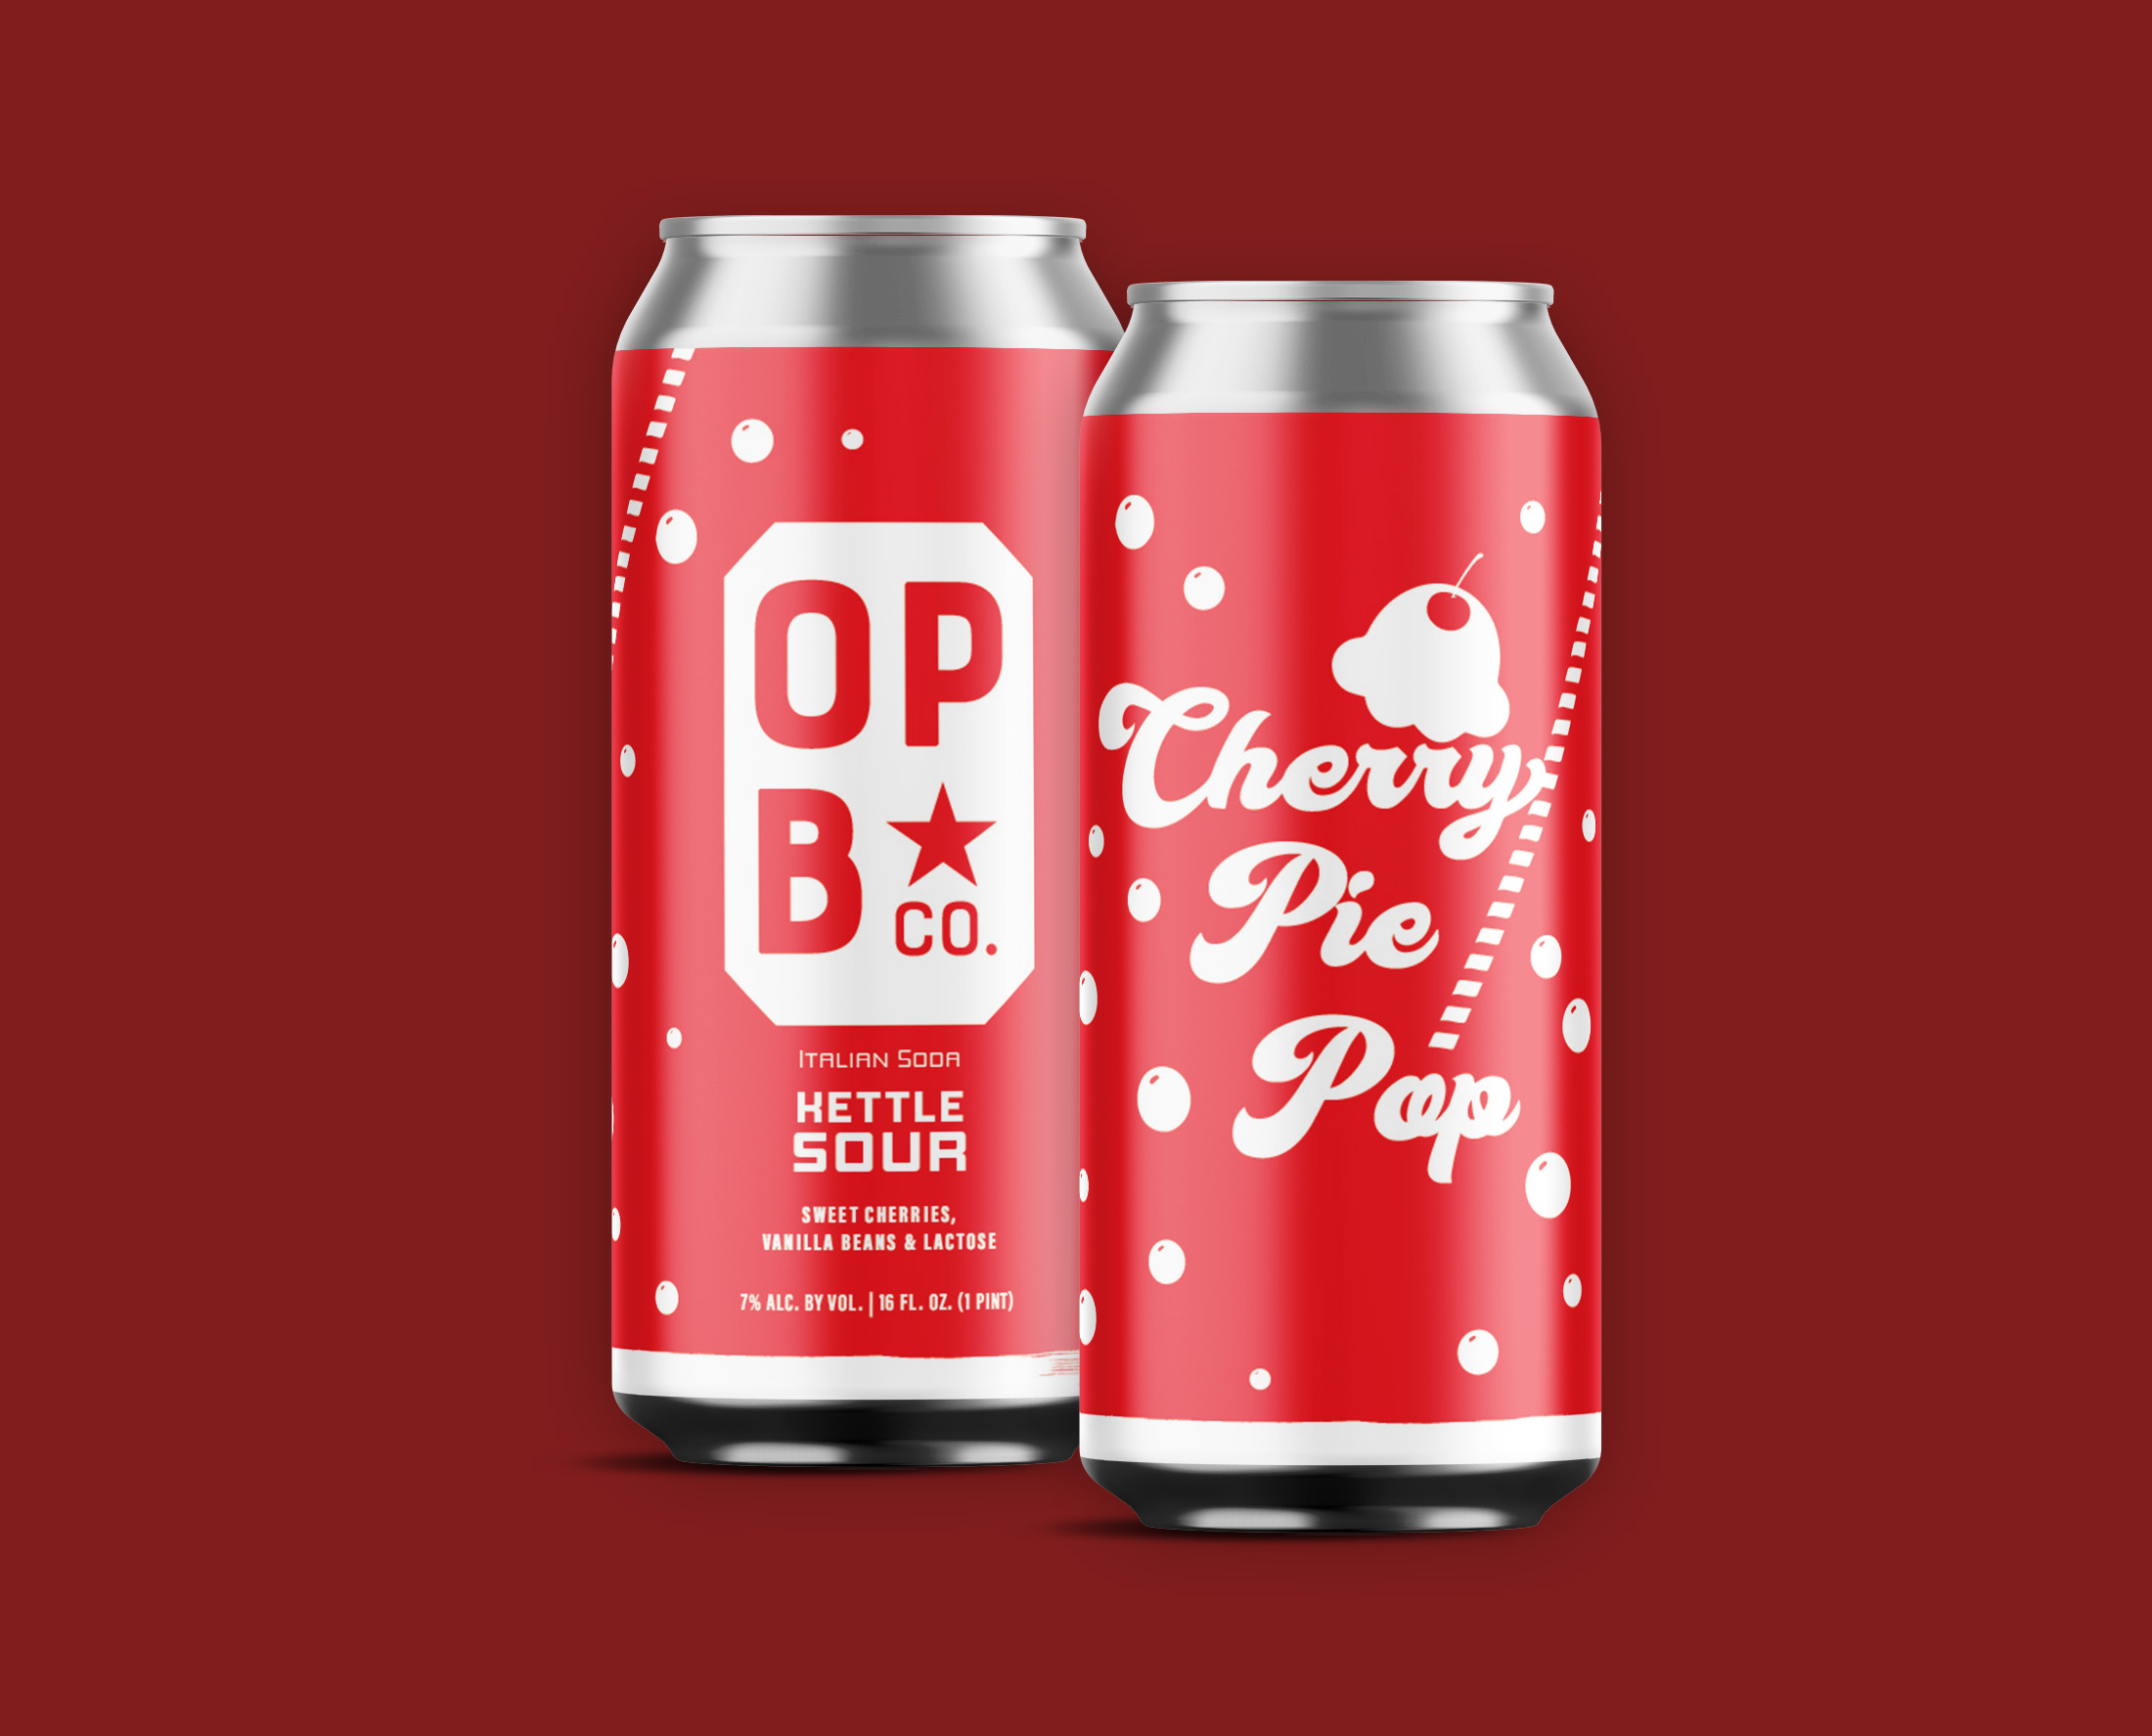 Digital rendering of the cherry pie pop, kettle sour beer, 2 cans